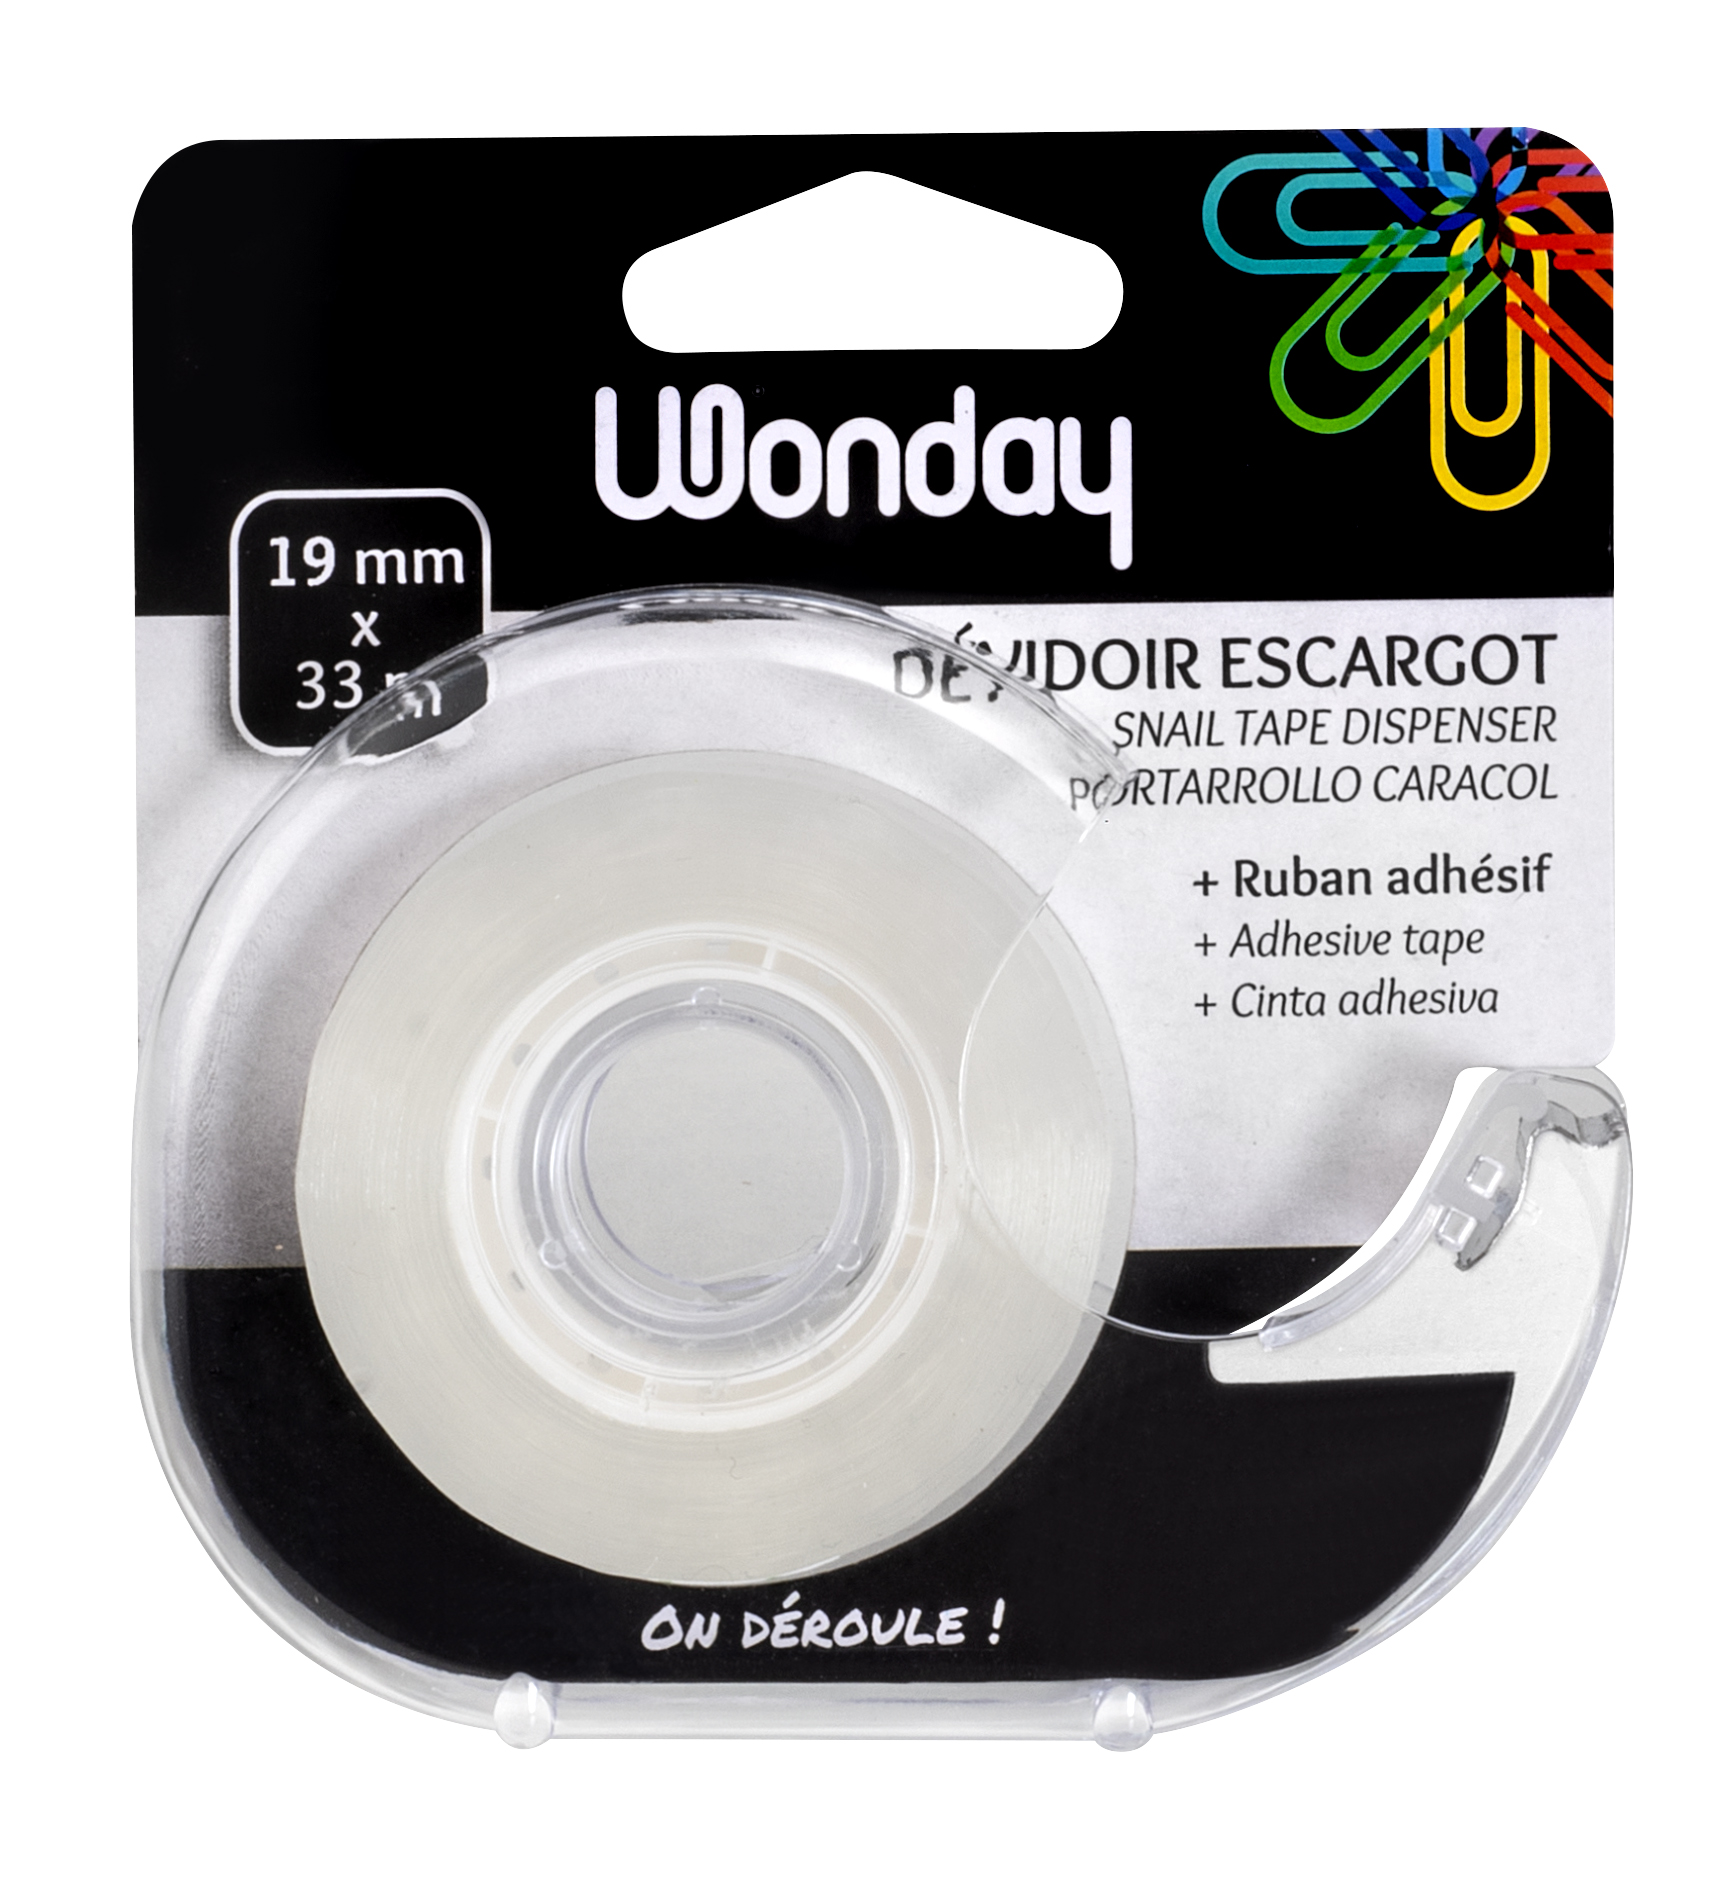 Wonday - Ruban adhésif avec dévidoir escargot - 19 mm x 33 m Pas Cher